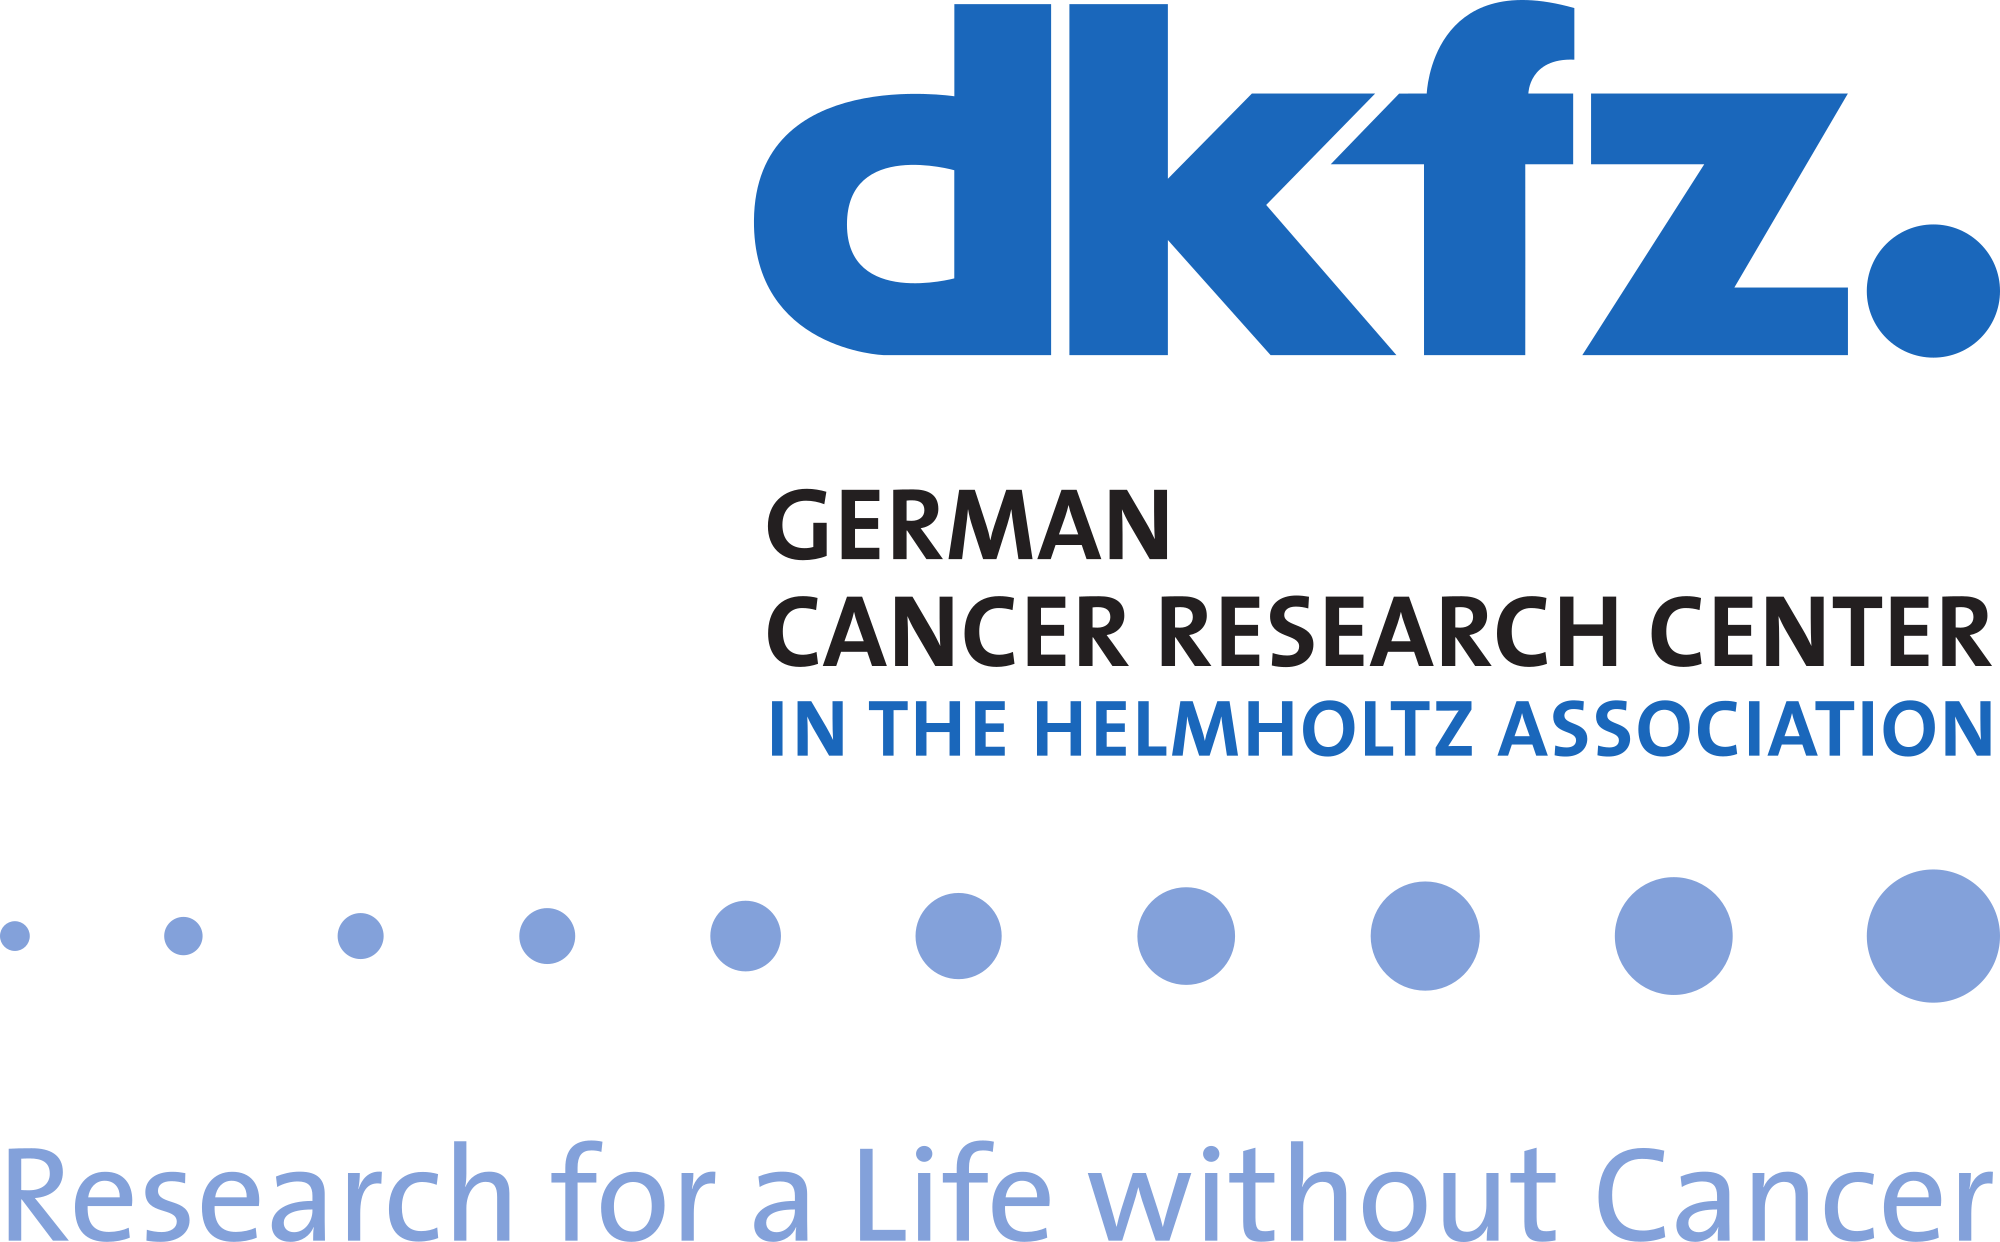 DKFZ Logo